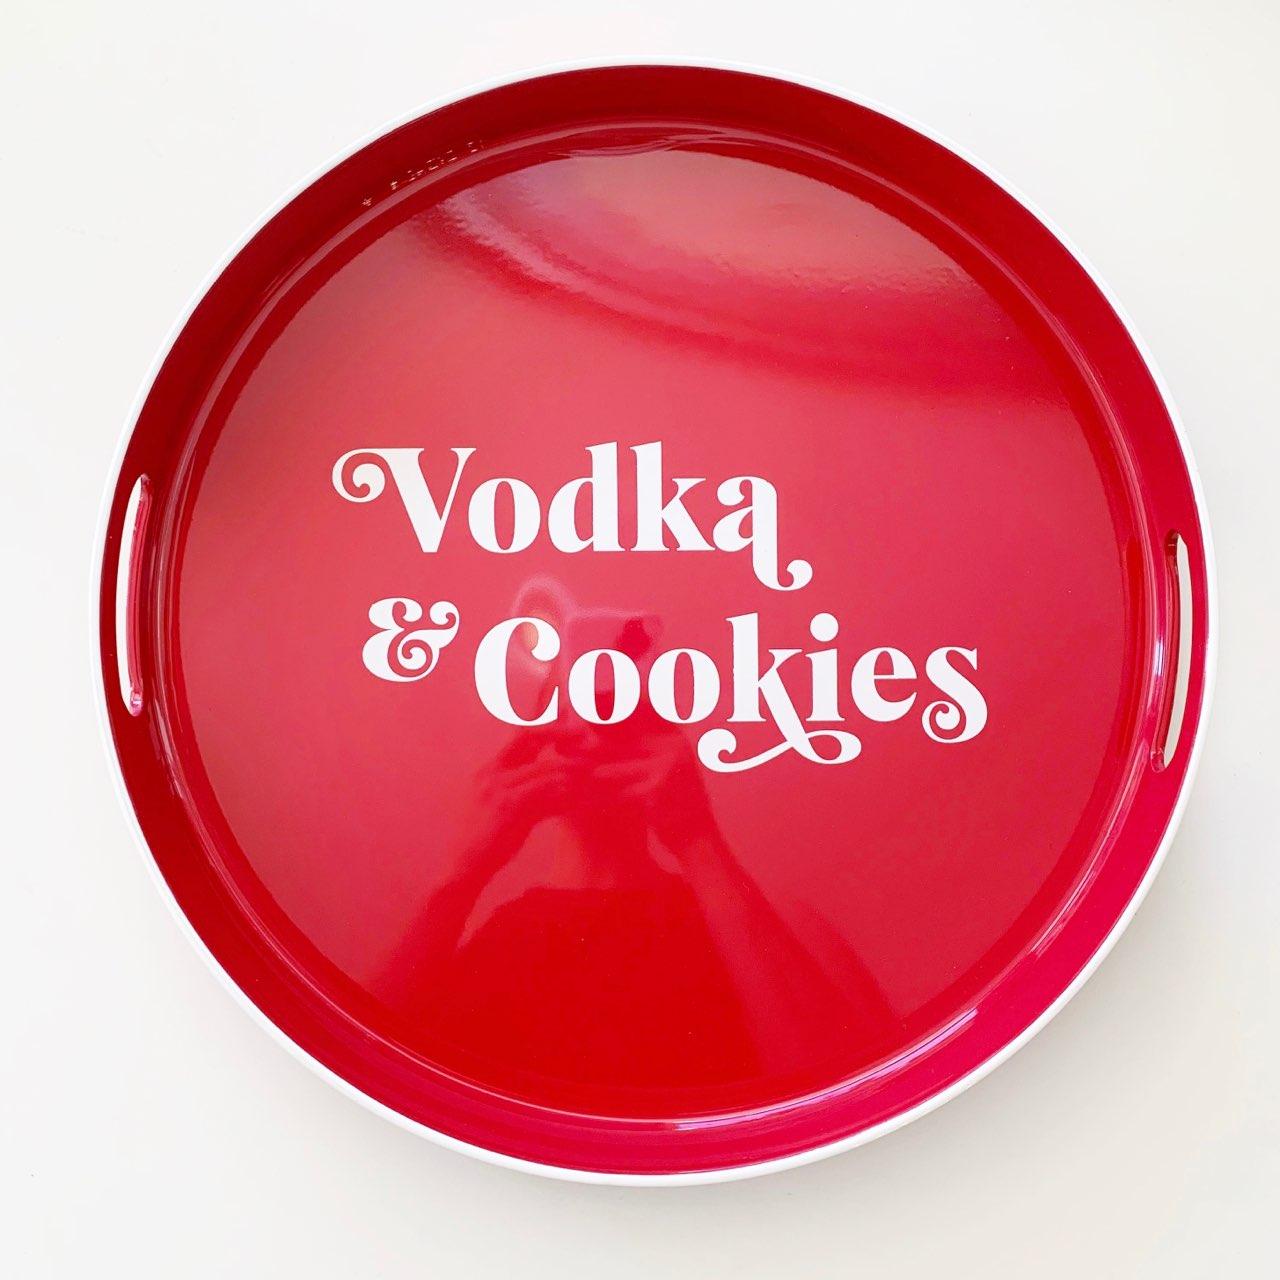 Vodka & Cookies Bar Tray